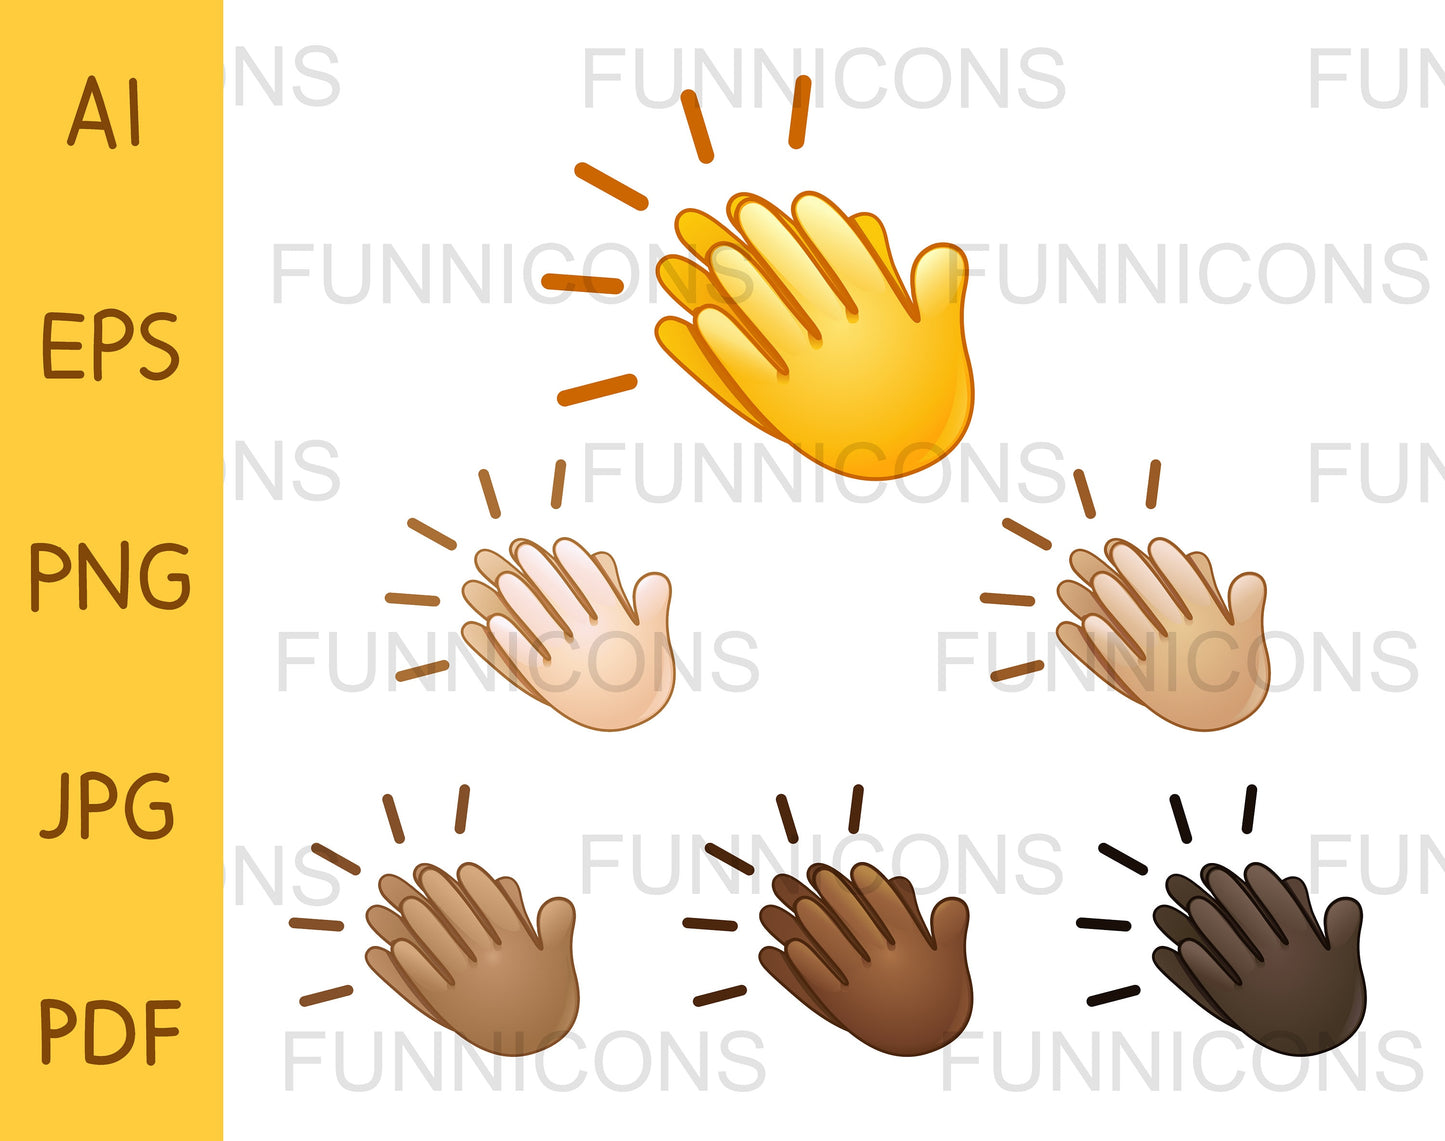 Clapping hands sign emoji set of various skin tones